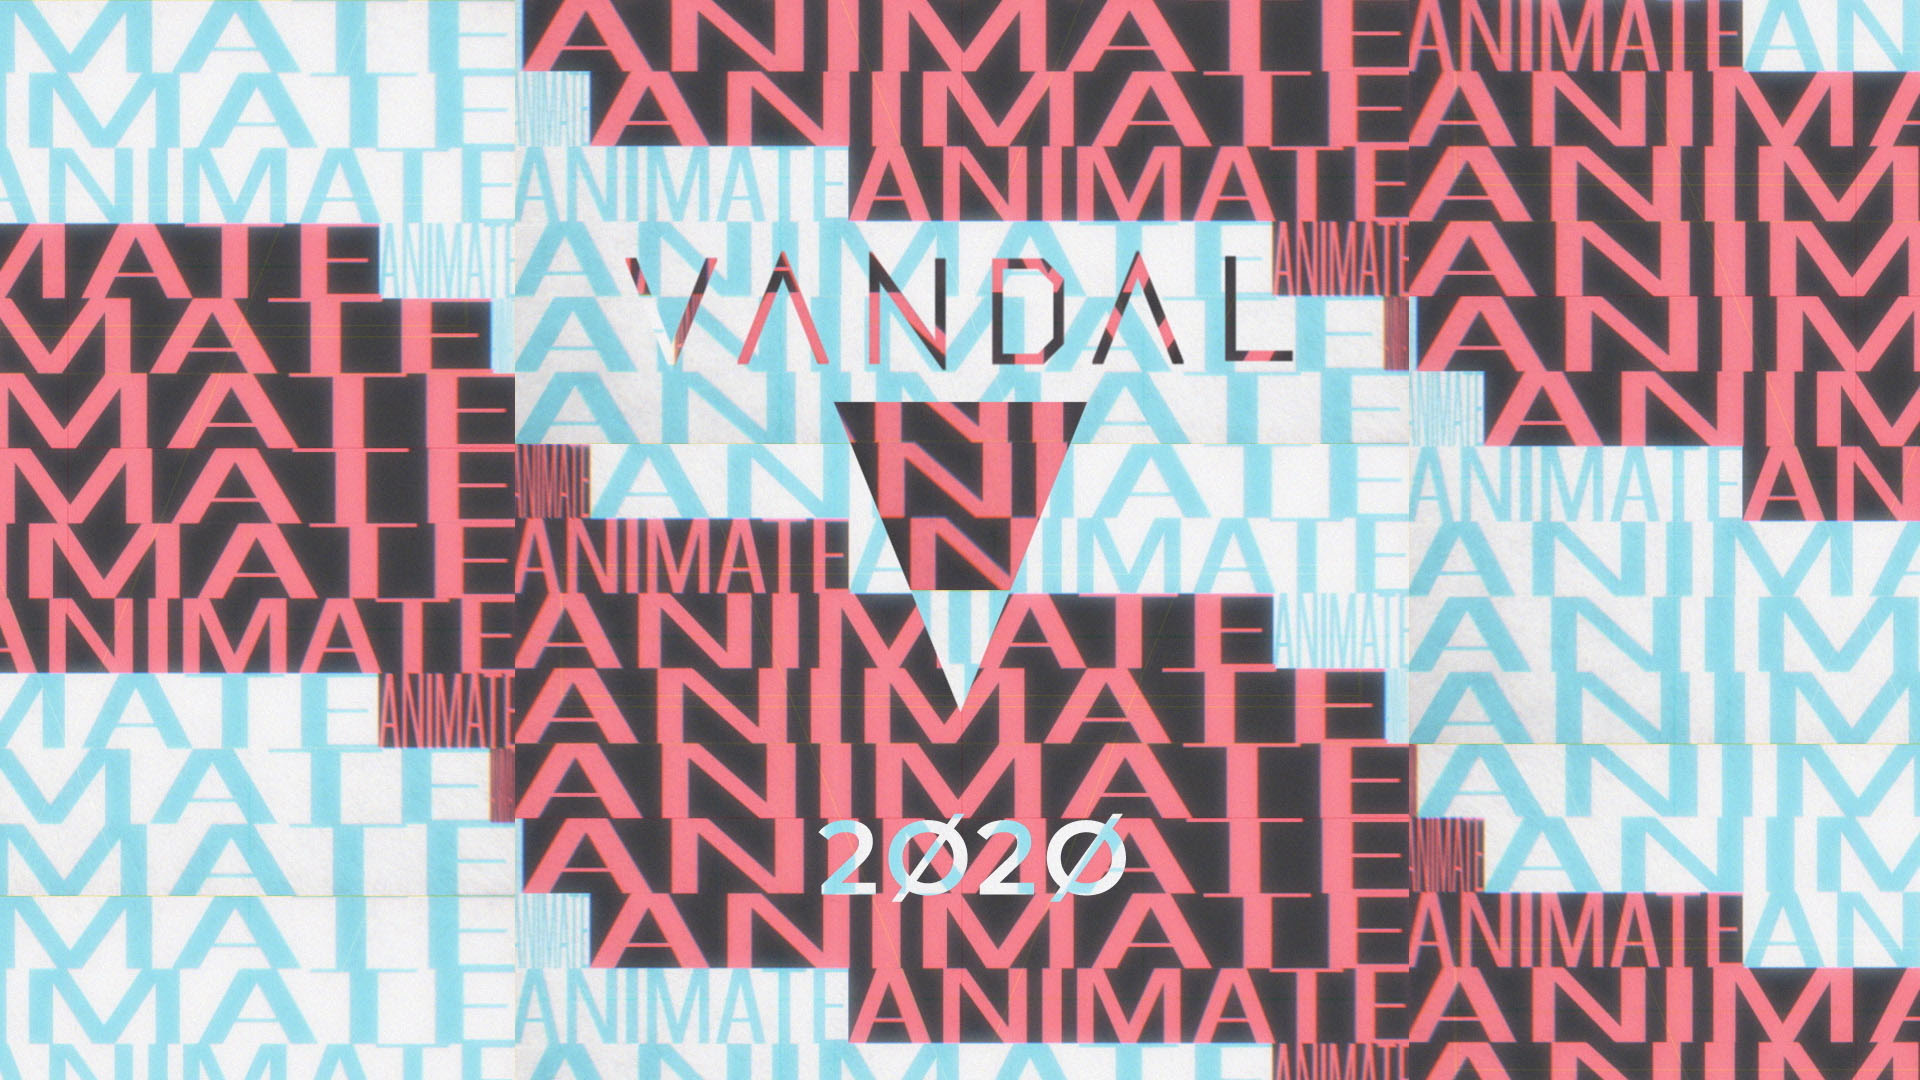 Vandal Animation Reel 2020